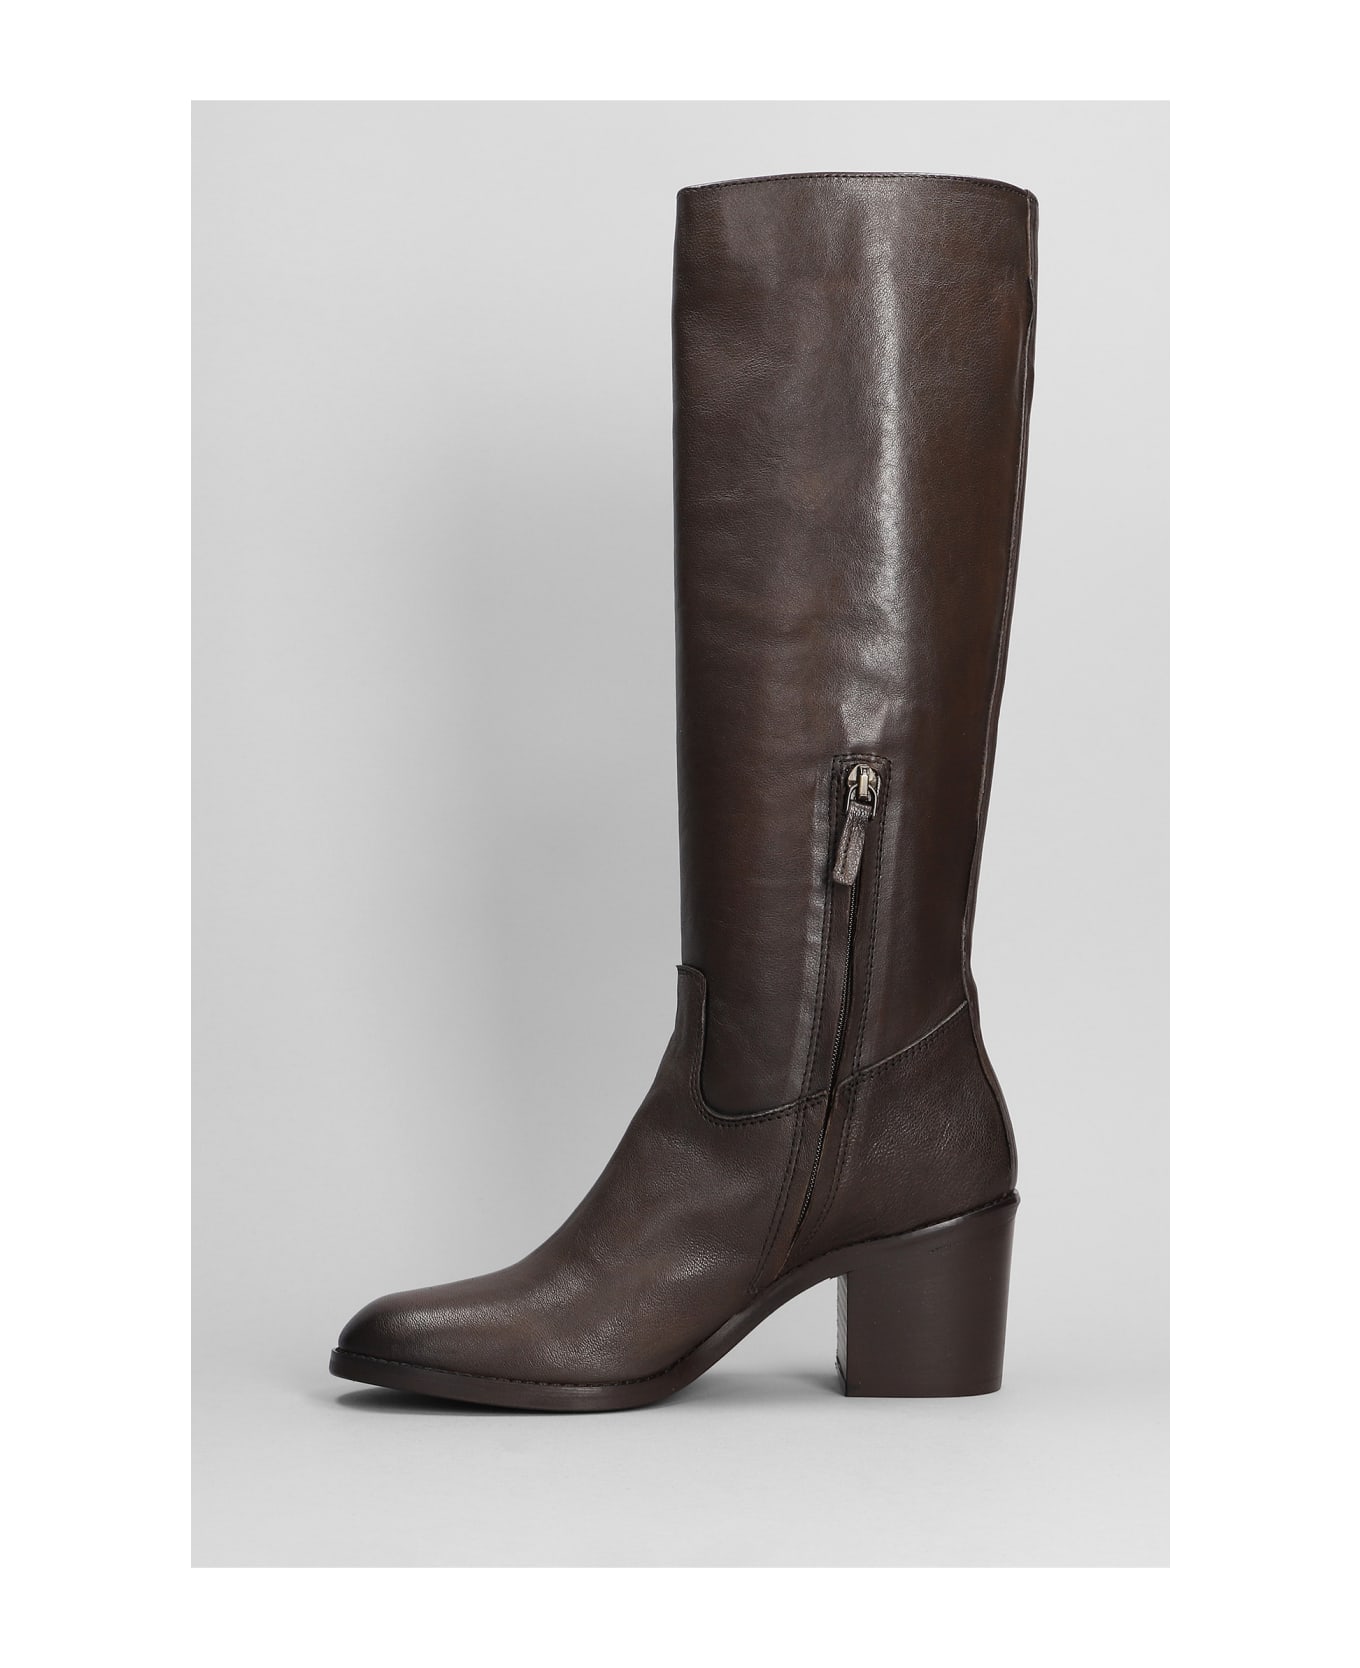 Julie Dee High Heels Boots In Dark Brown Leather - dark brown